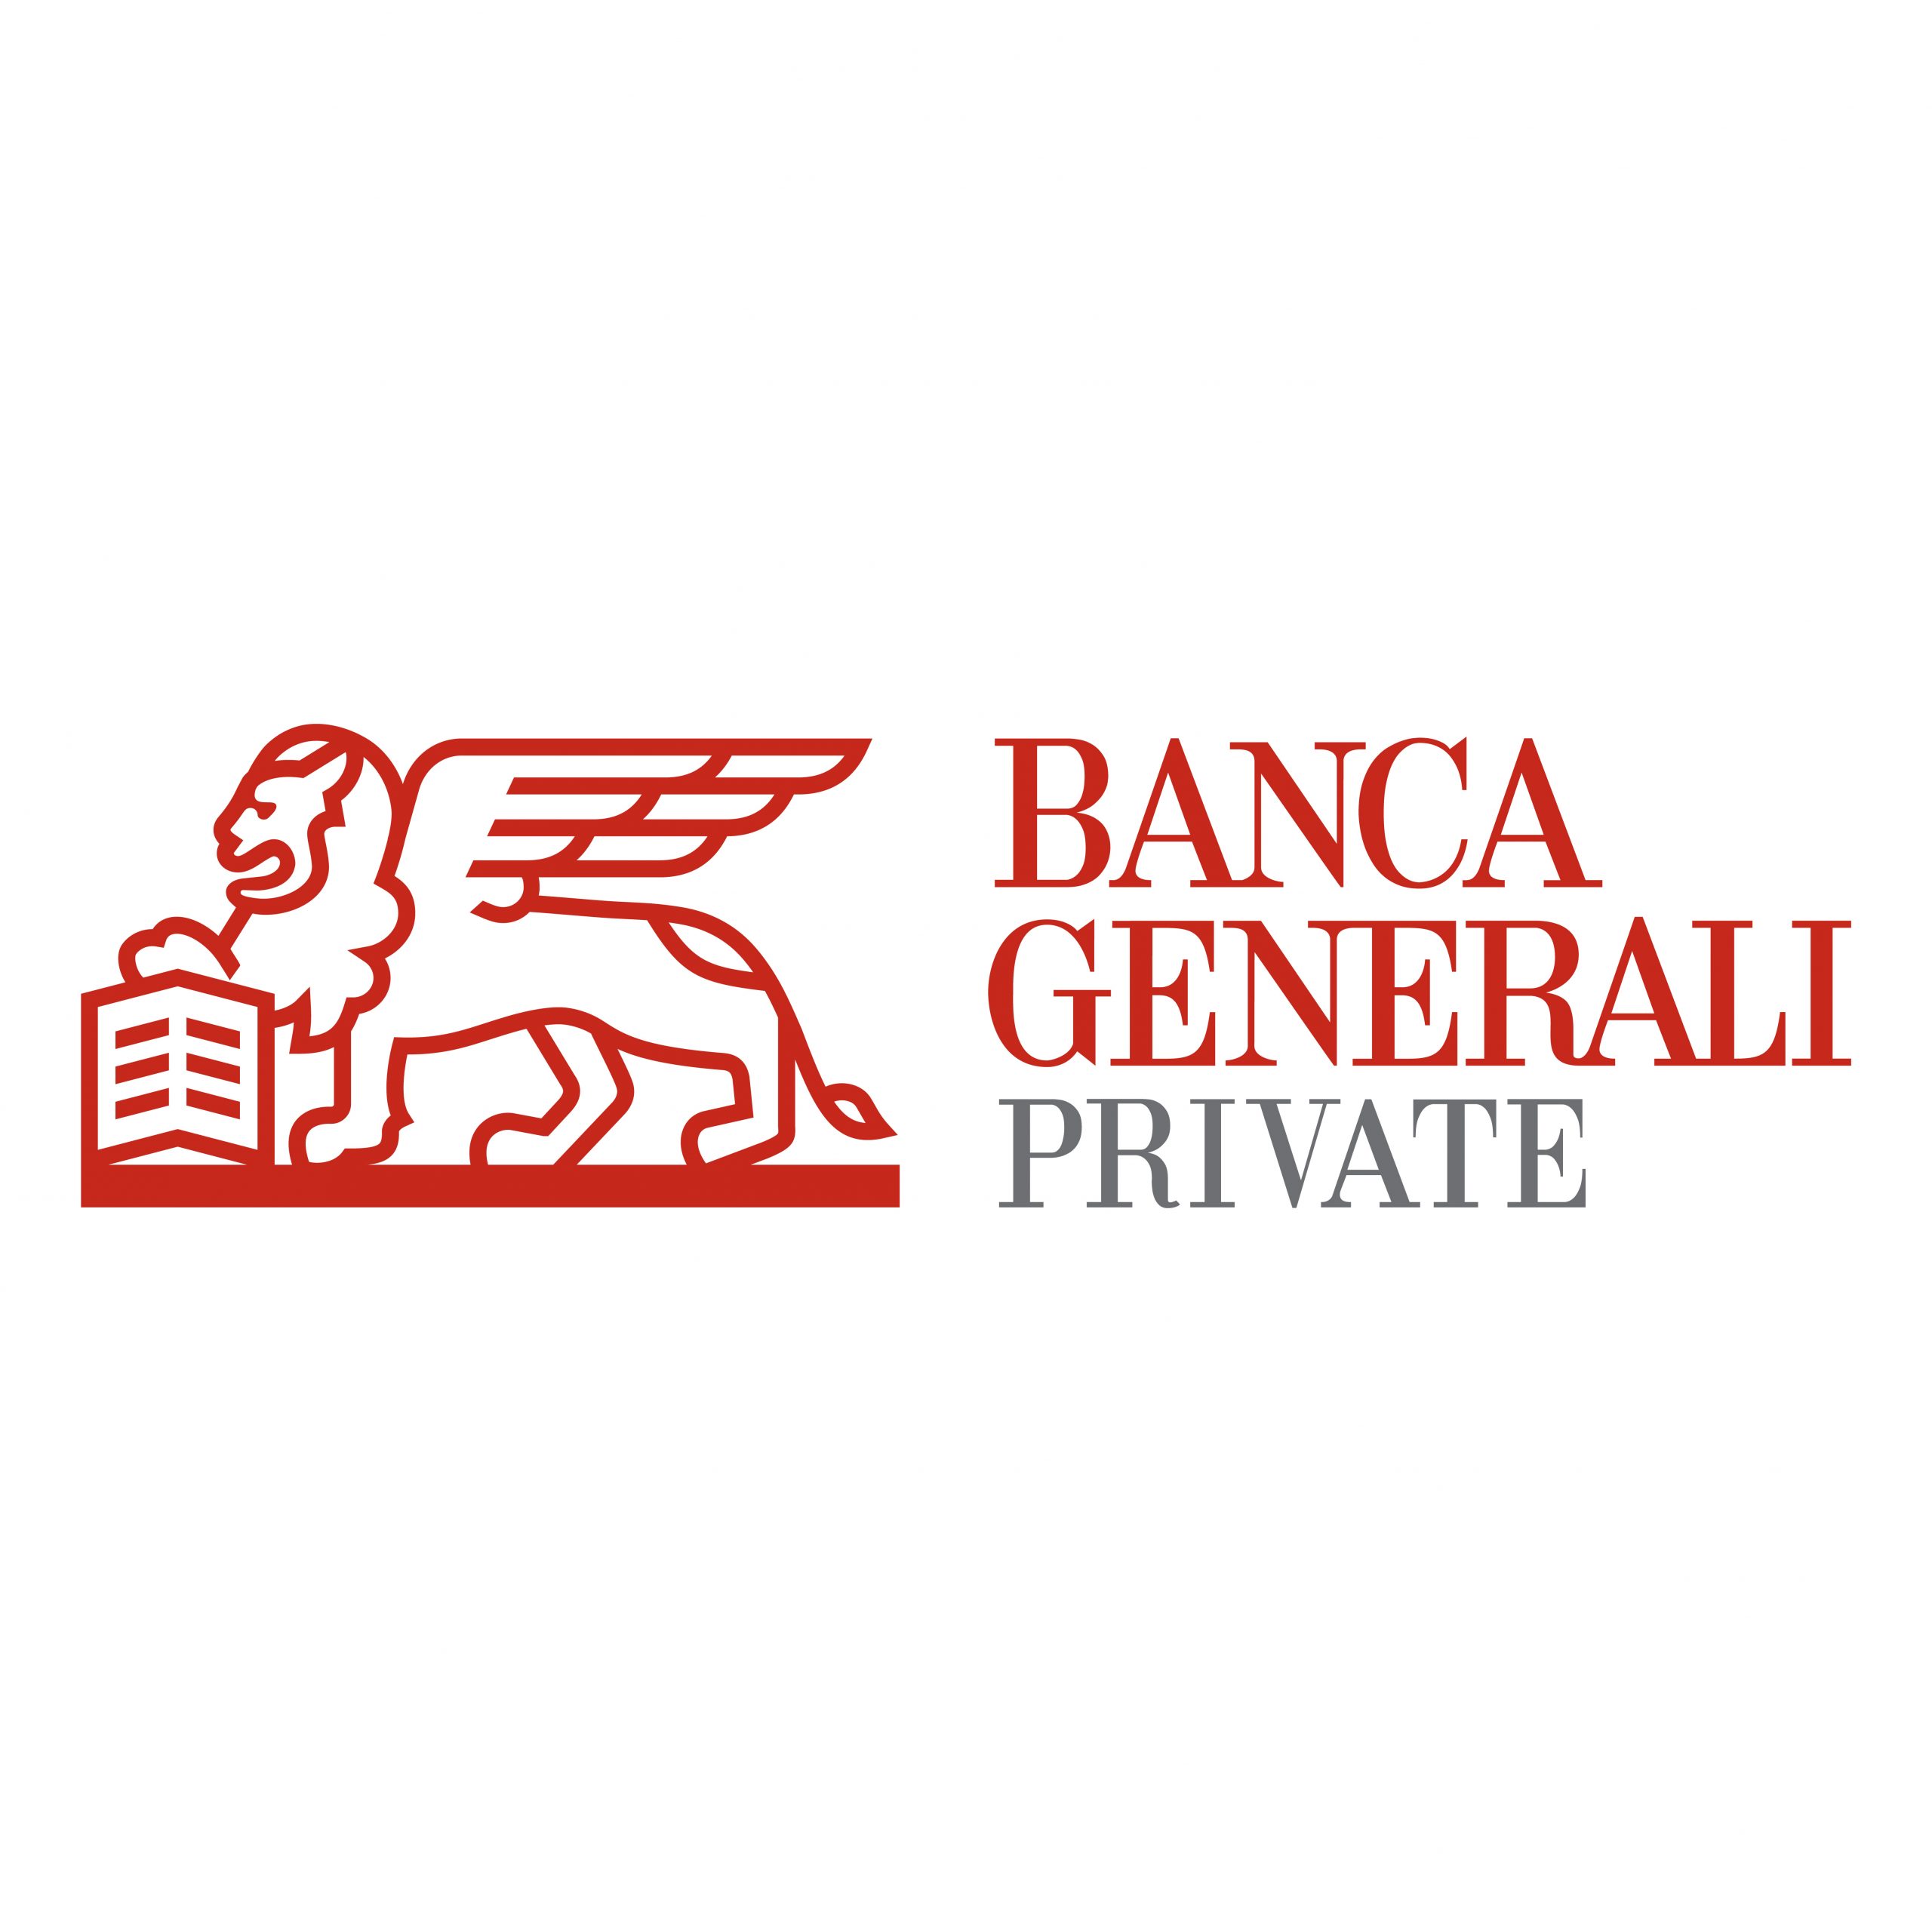 Banca Generali : Brand Short Description Type Here.